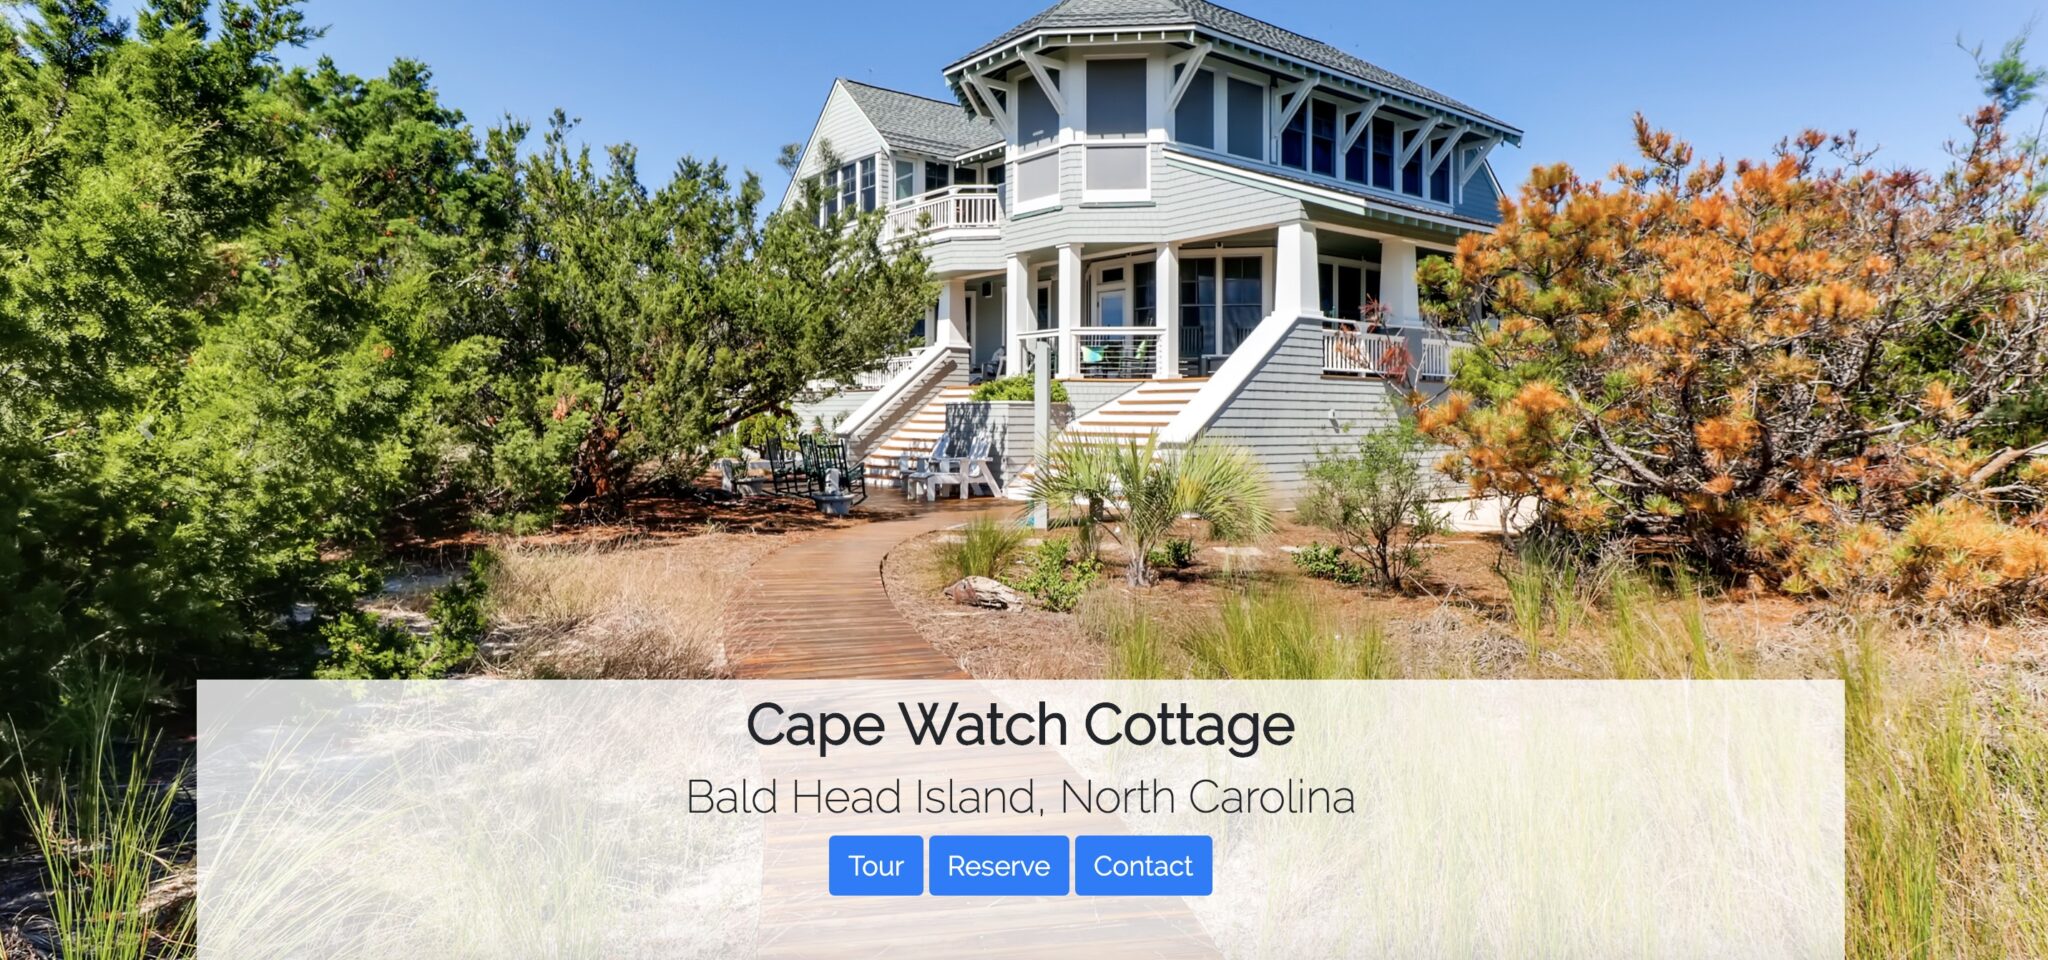 Cape Watch Cottage Website